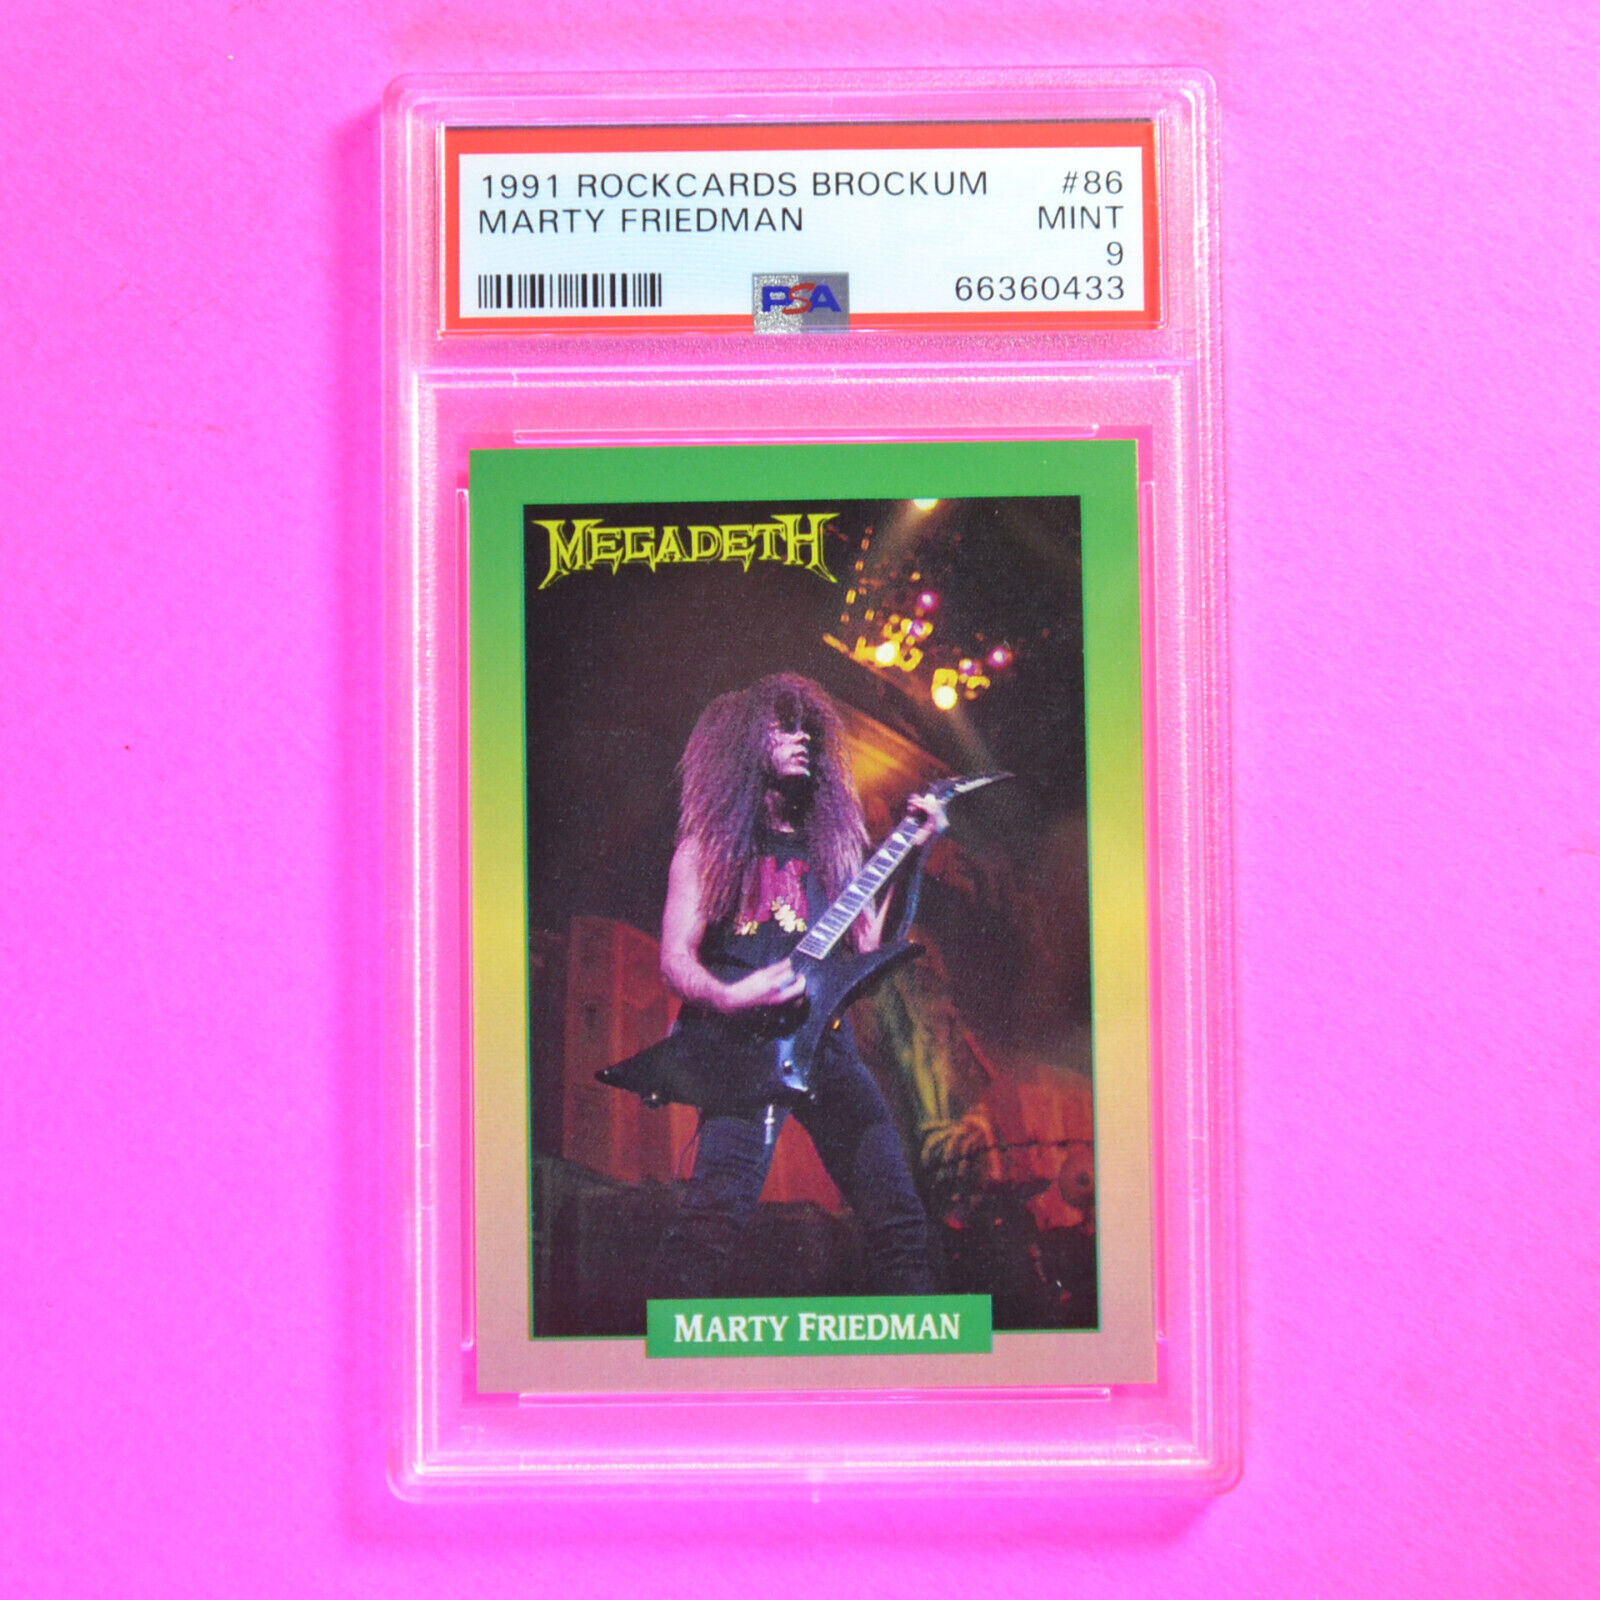 1991 RockCards Brockum #86 Marty Friedman Megadeath Metal - PSA 9 Mint Rare